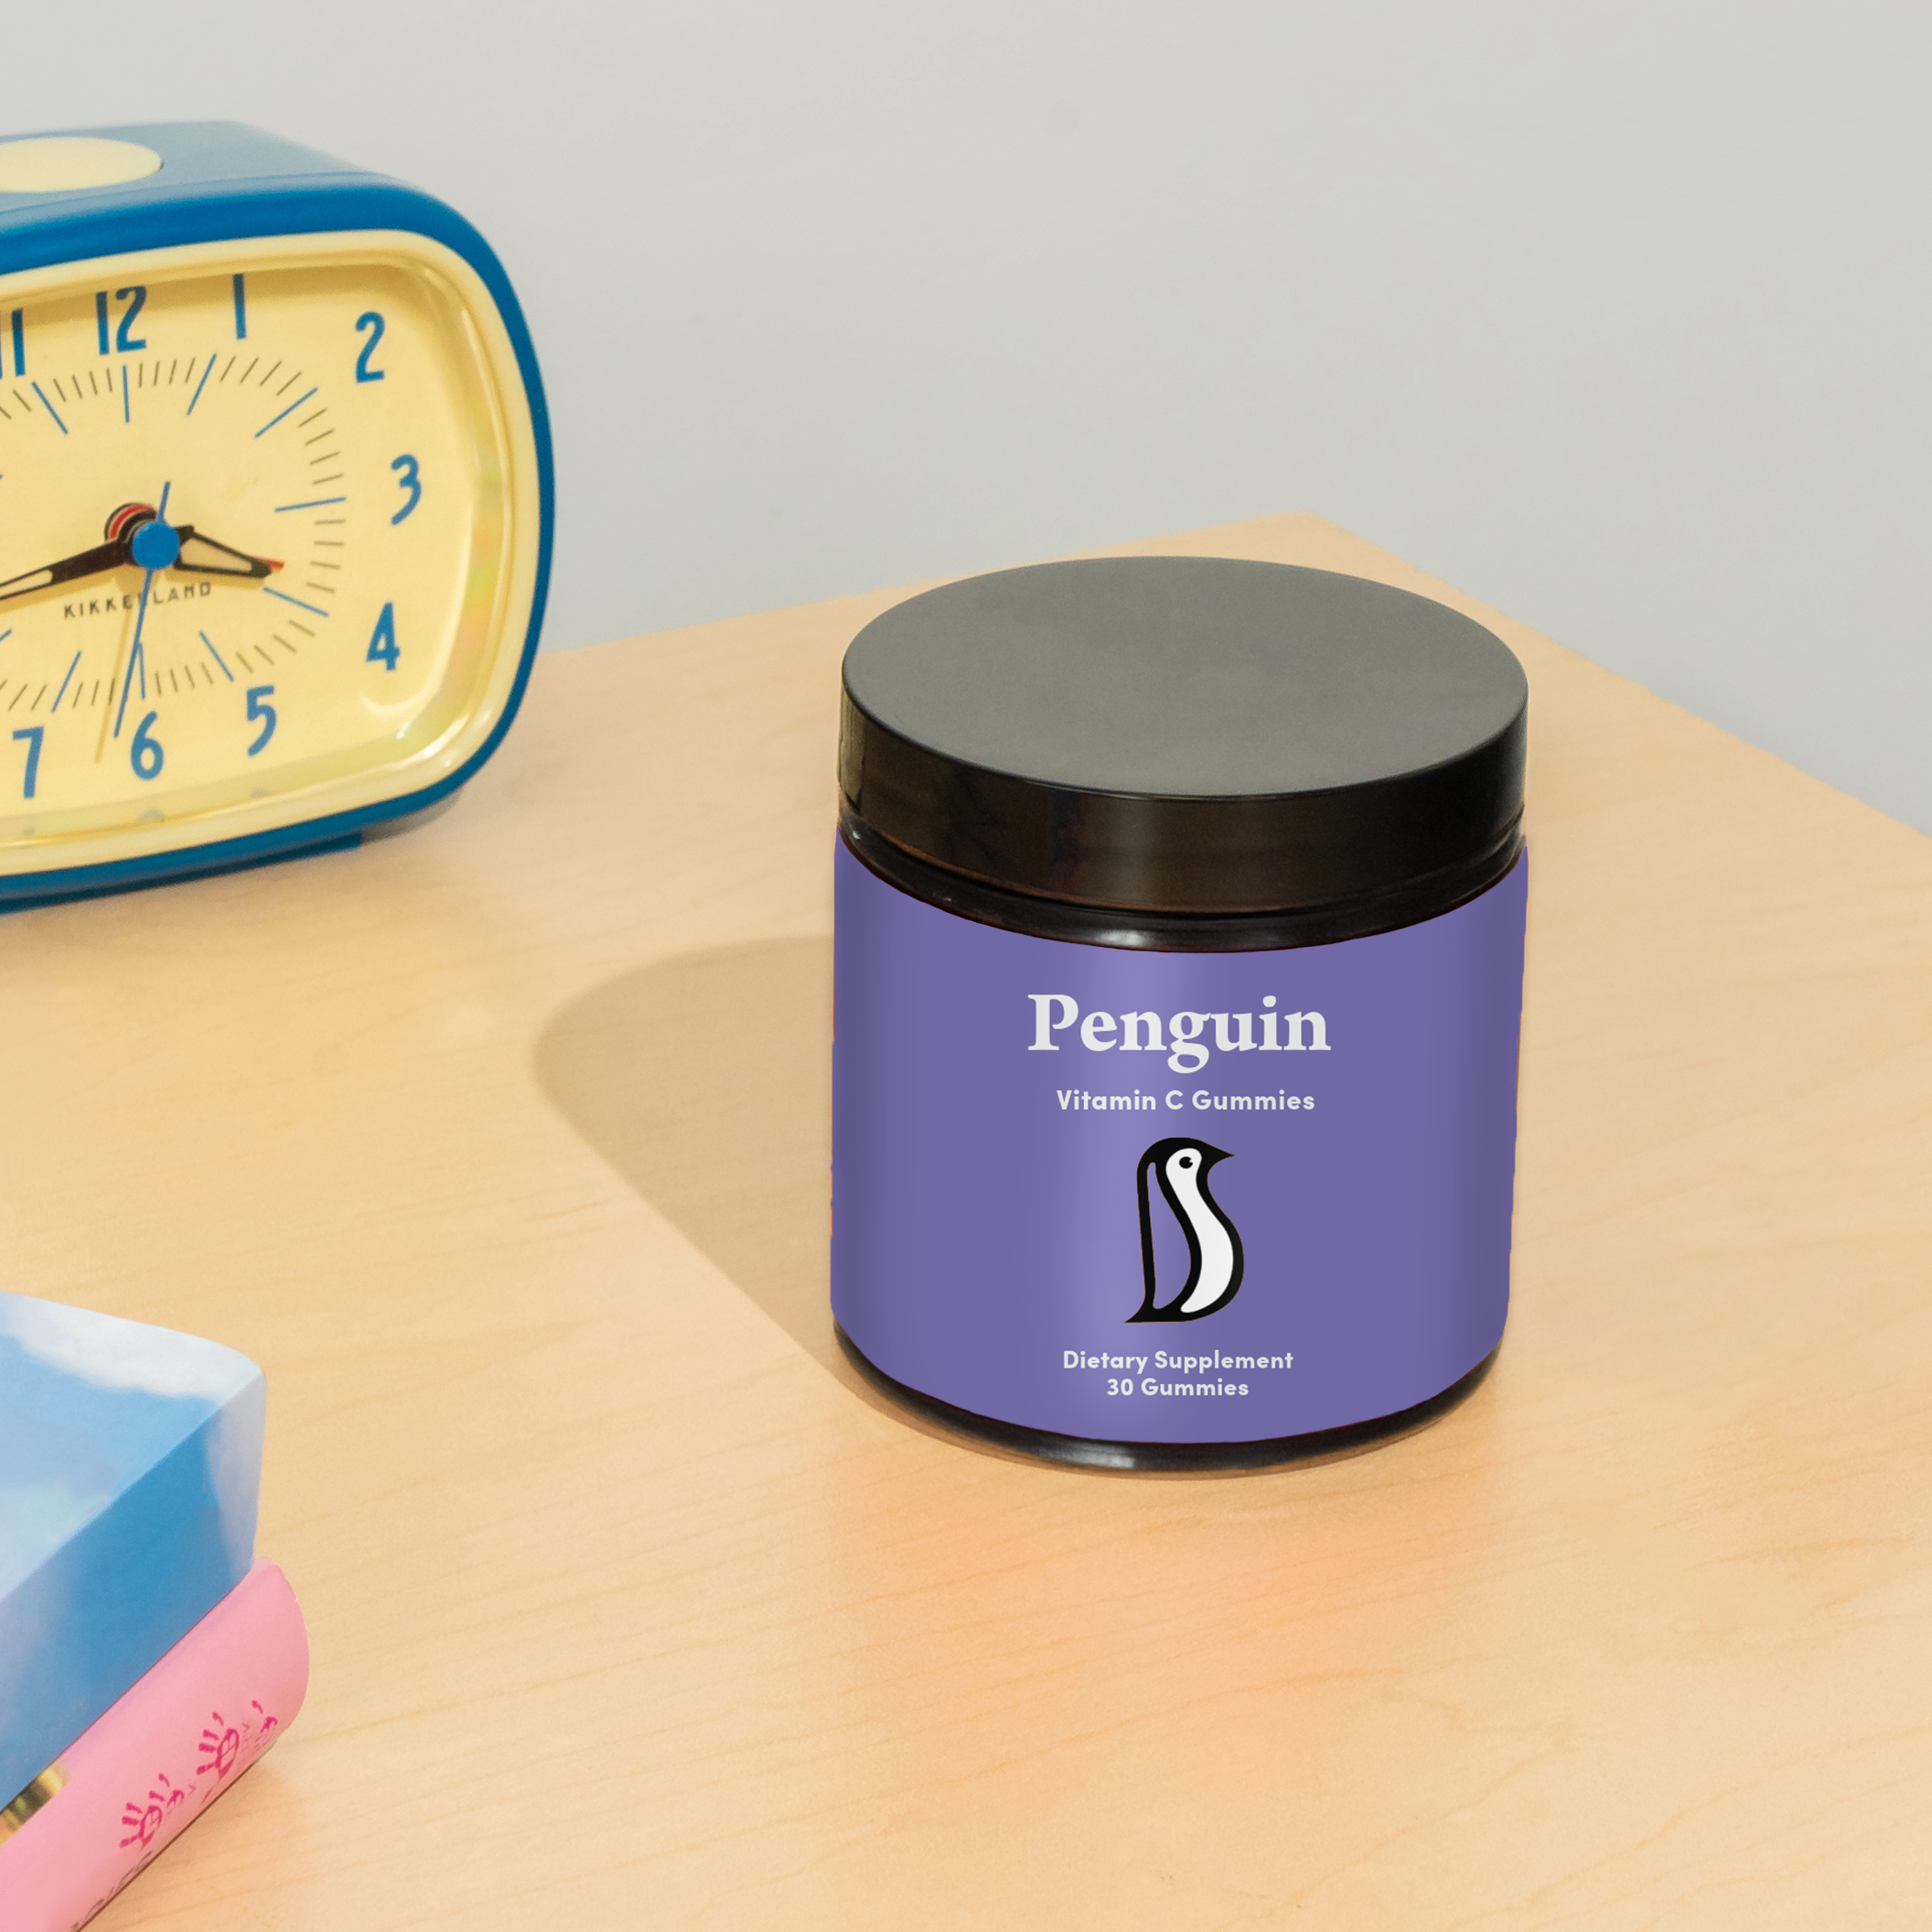 Penguin CBD | How It Works